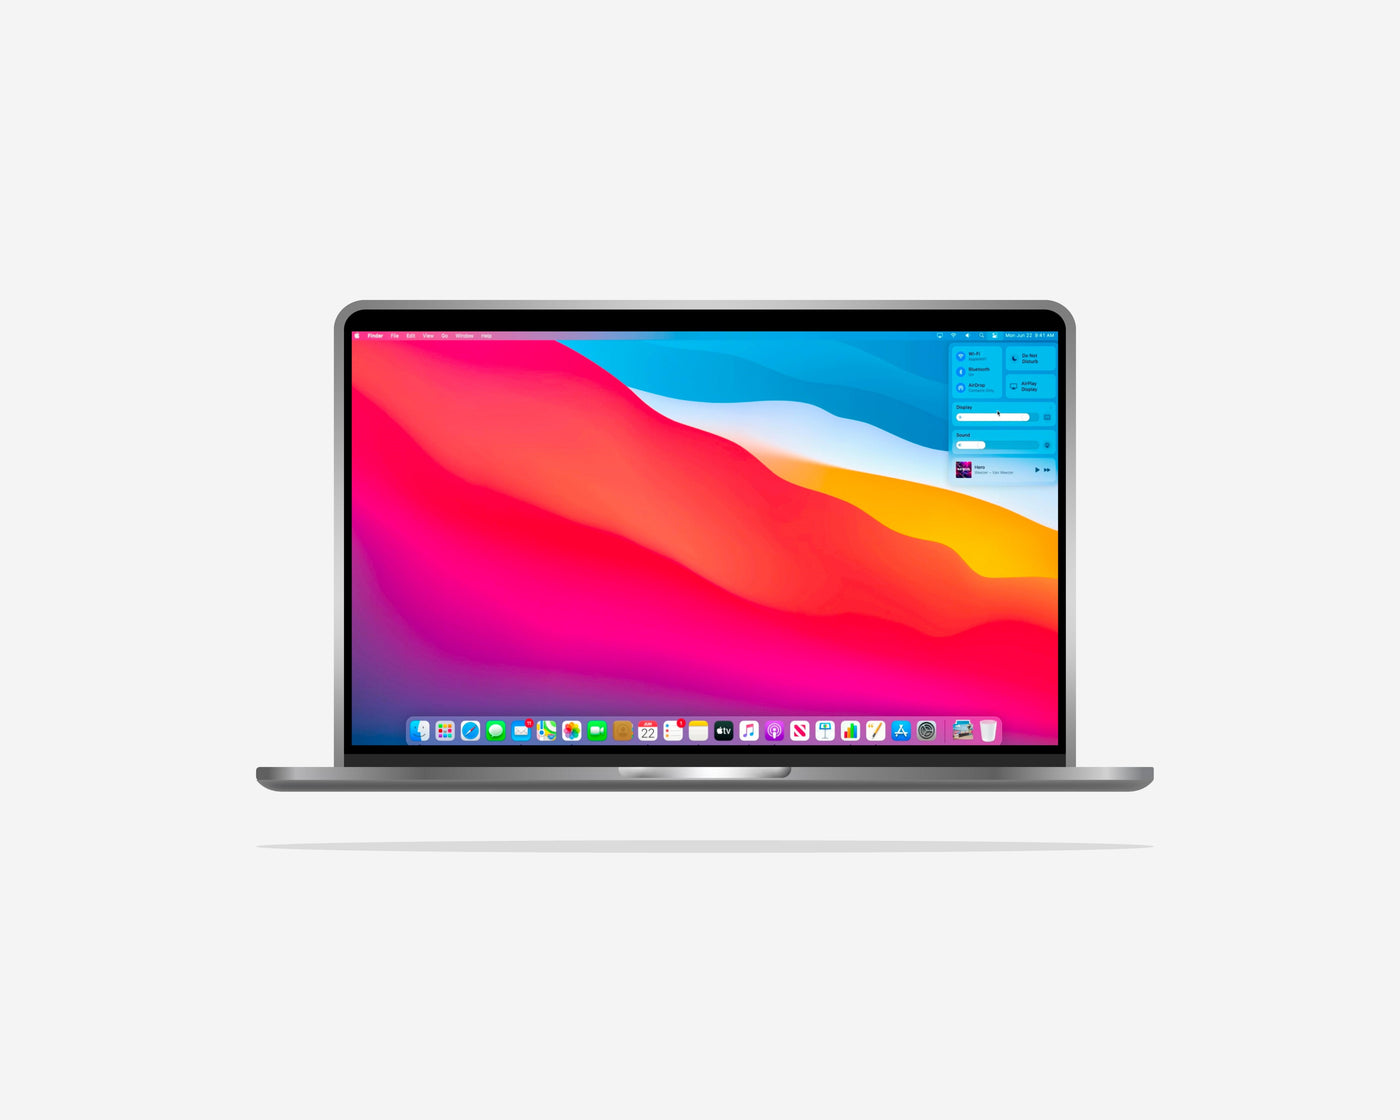 MacBook laptop against a light background